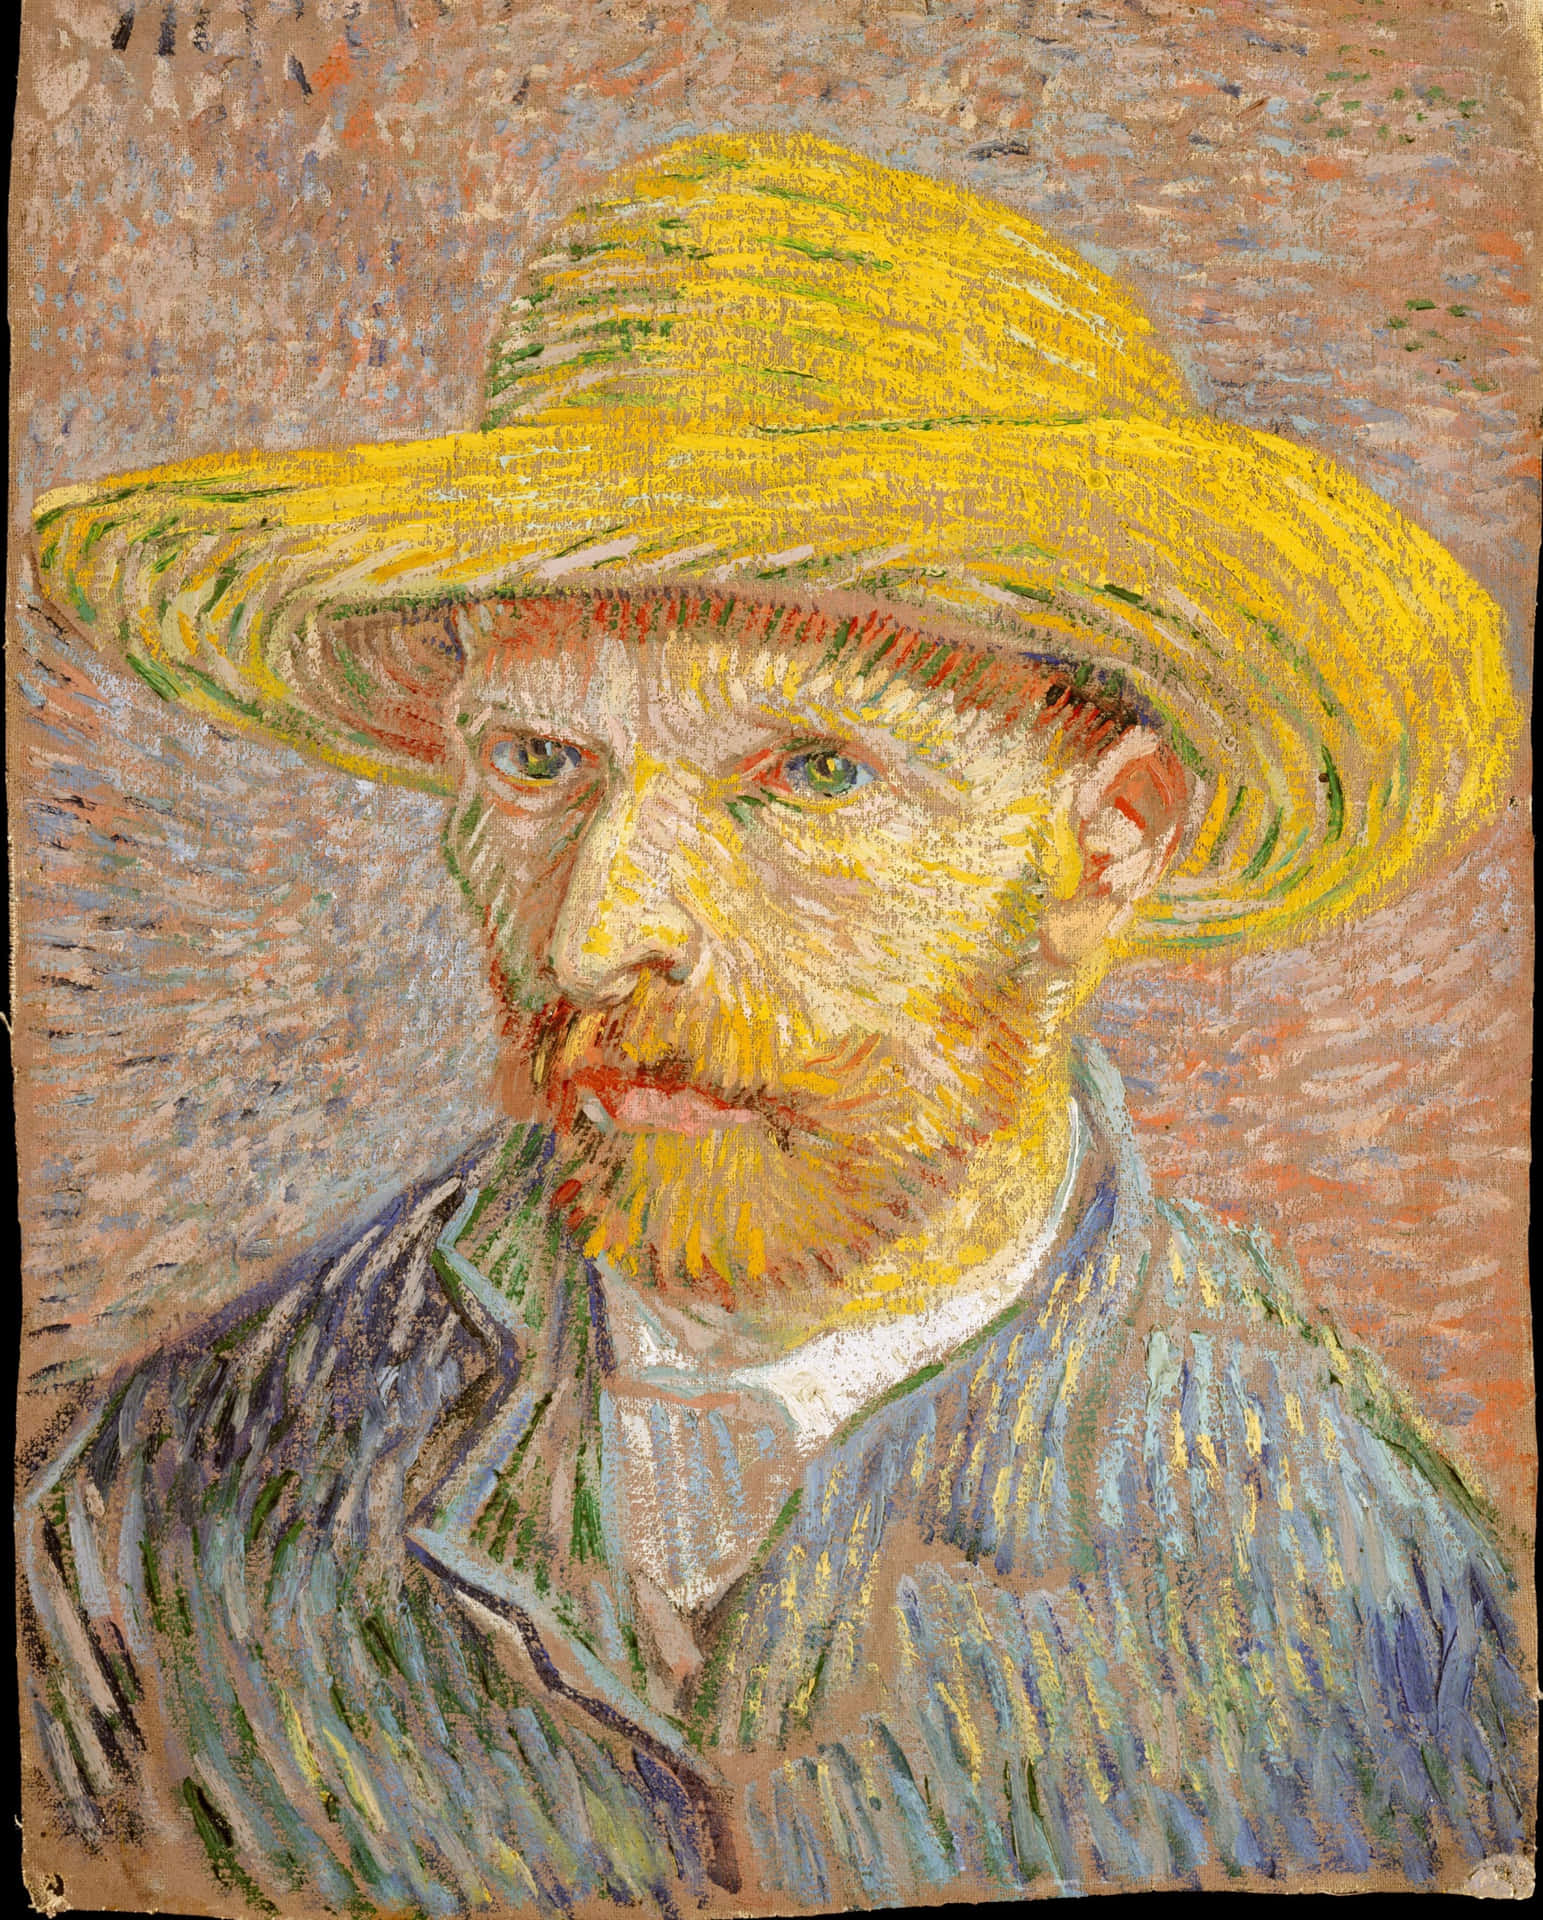 Starry Night by Dutch Artist, Vincent Van Gogh